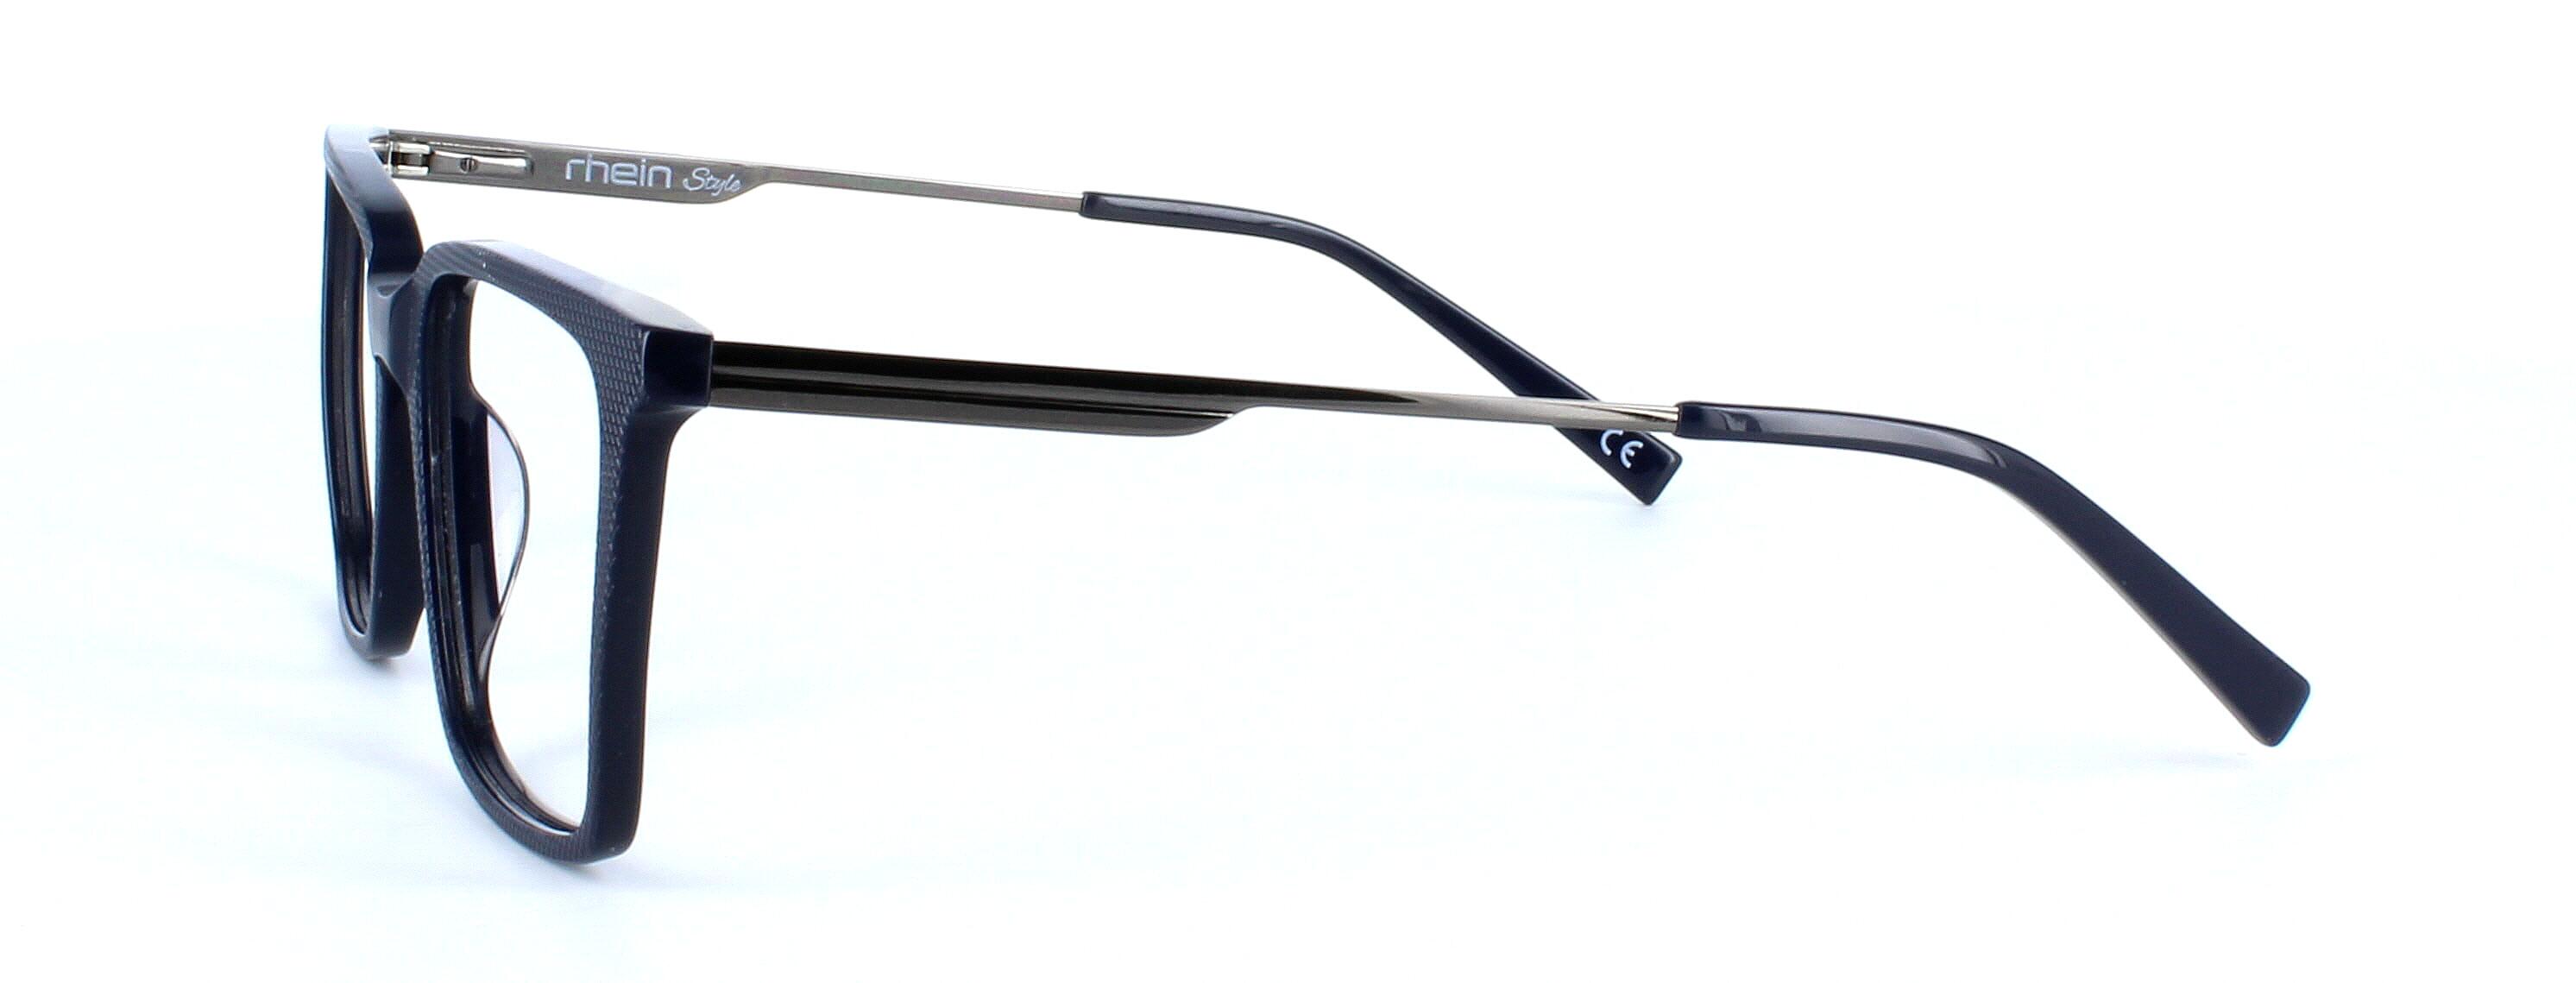 Hadlow - Gent's matt black acetate glasses frame with rectangular shaped lenses - image 2